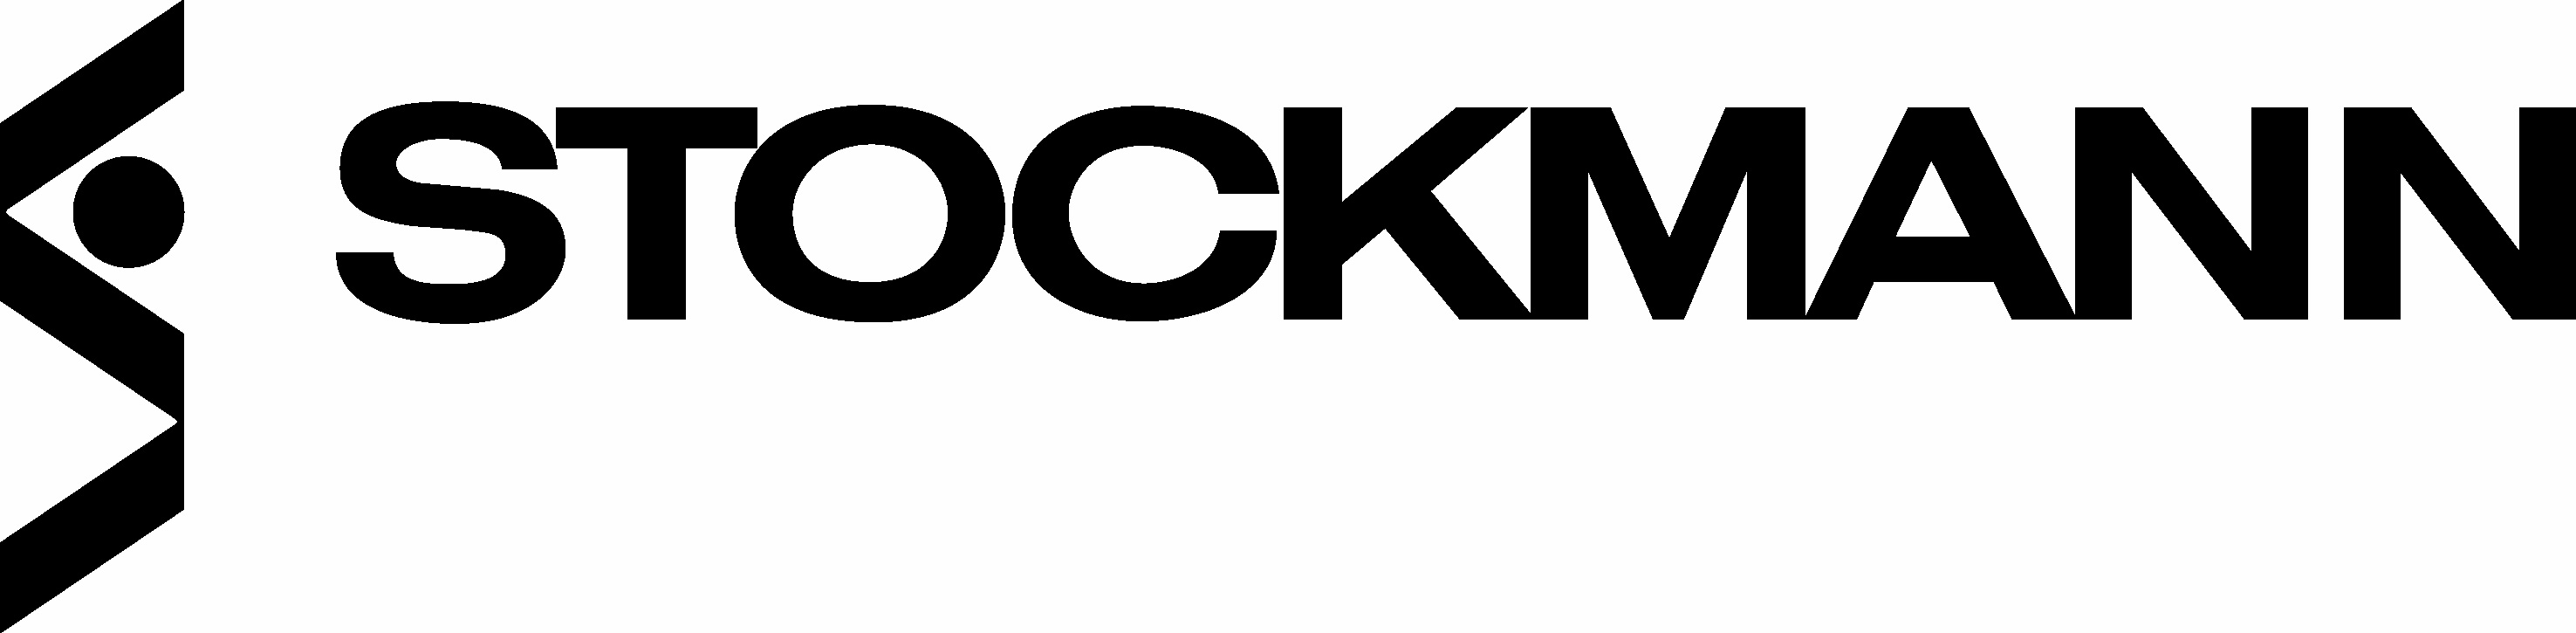 Stockmann-logo-bw